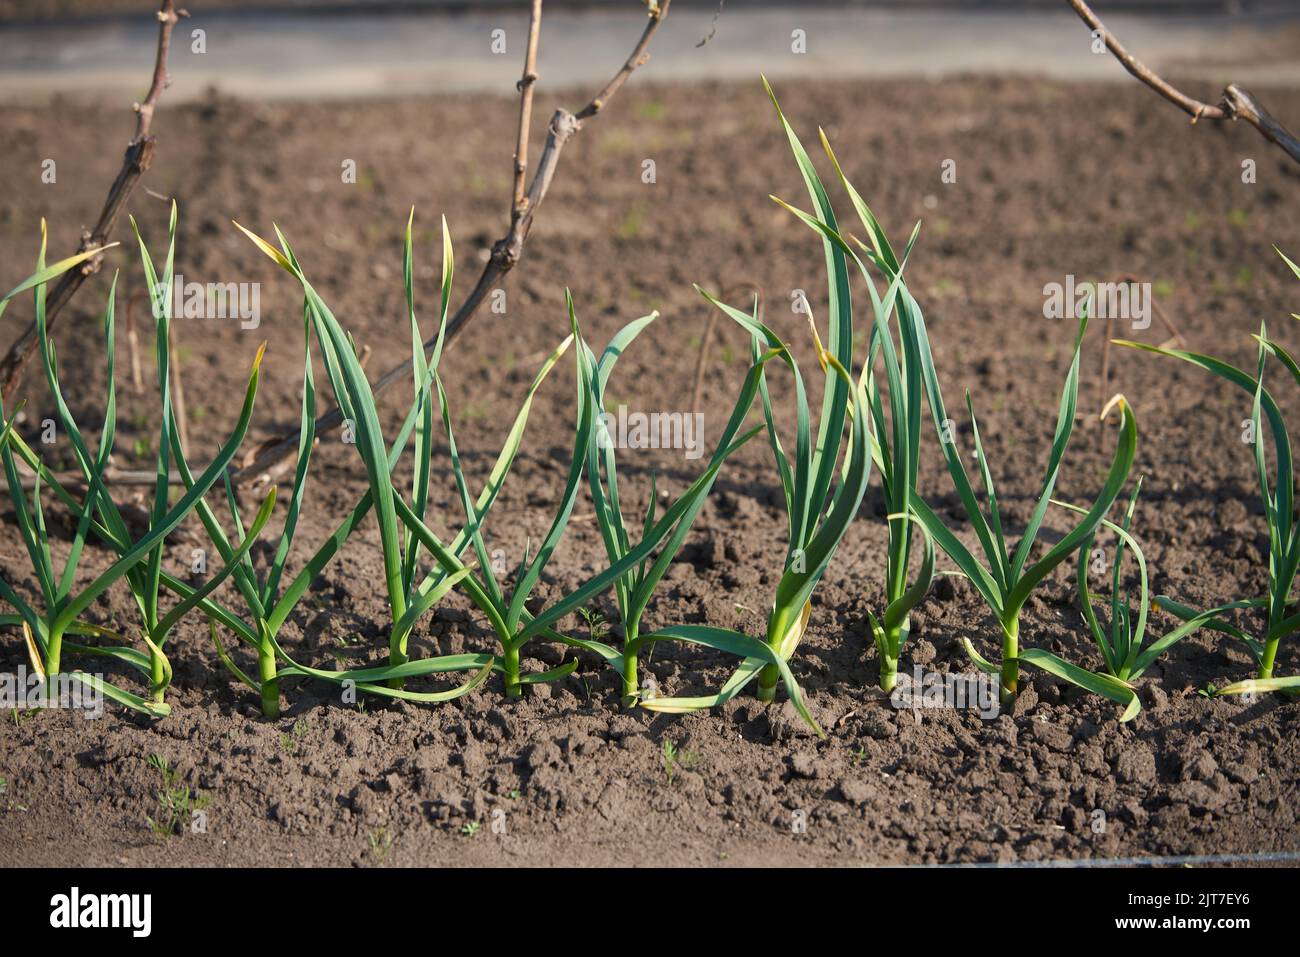 Green garlic sprouts growing in a vegetable garden Stock Photo